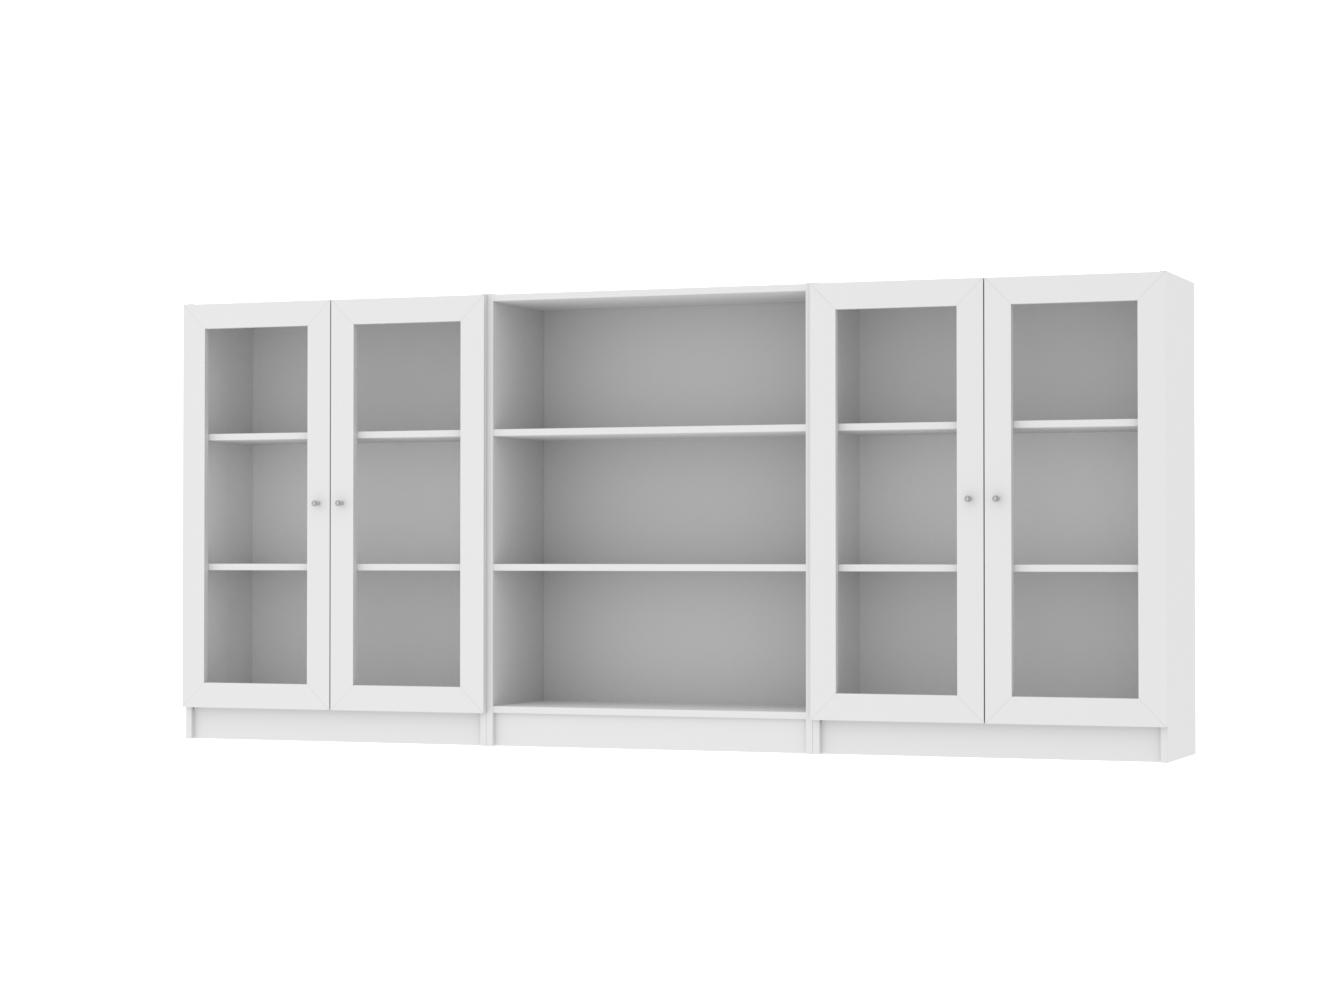  Книжный шкаф Билли 417 white ИКЕА (IKEA) изображение товара